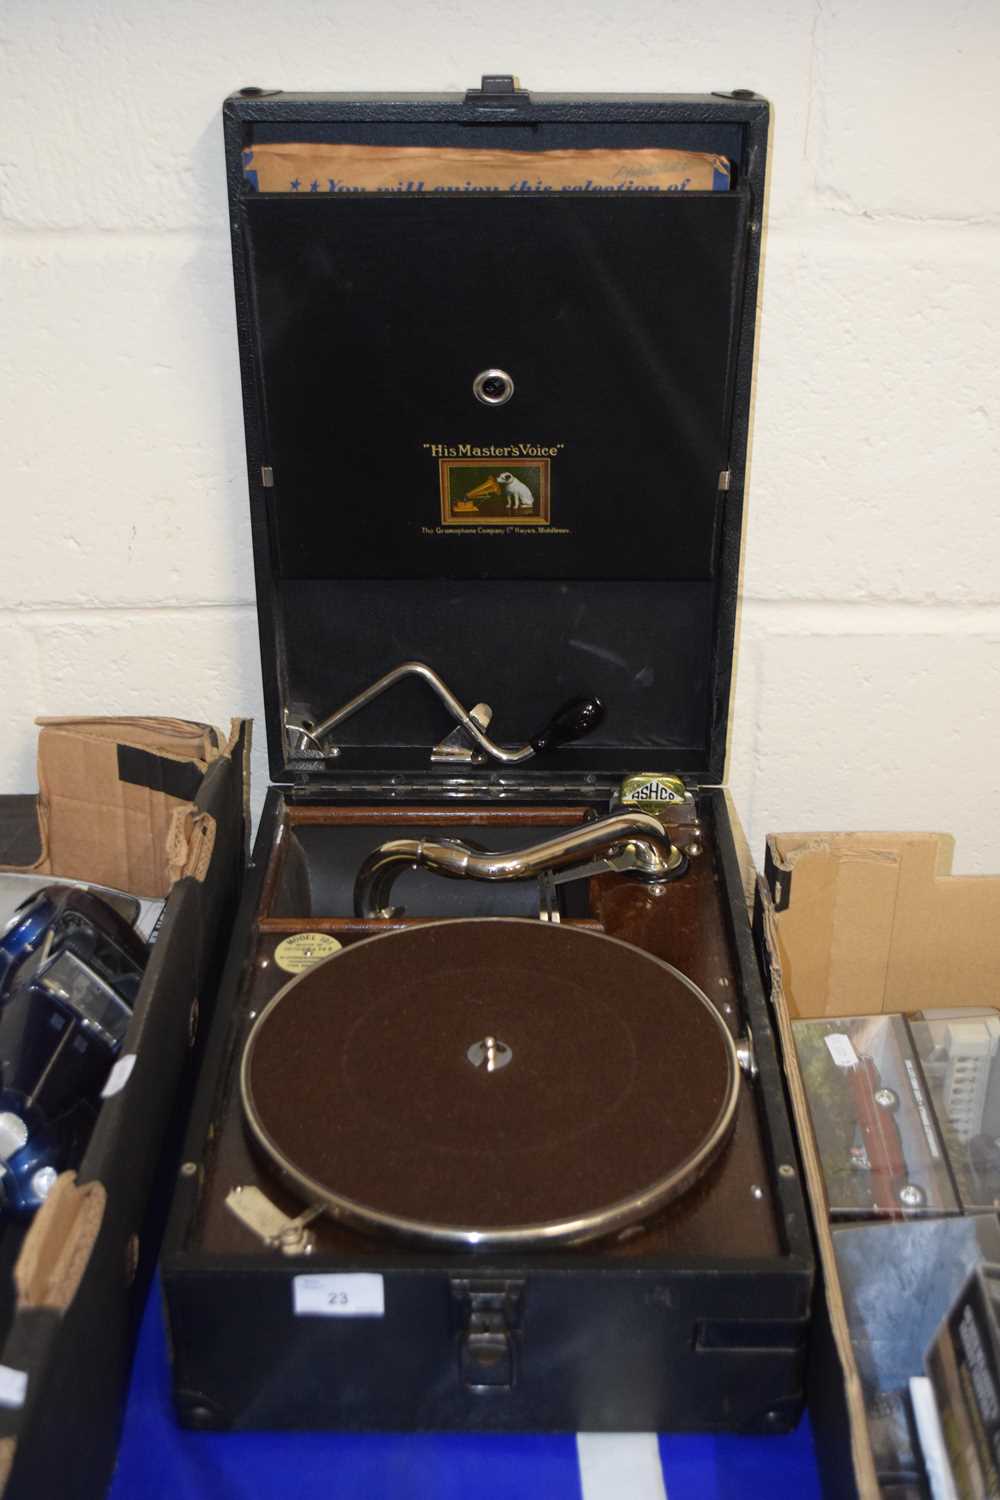 An HMV portable gramophone